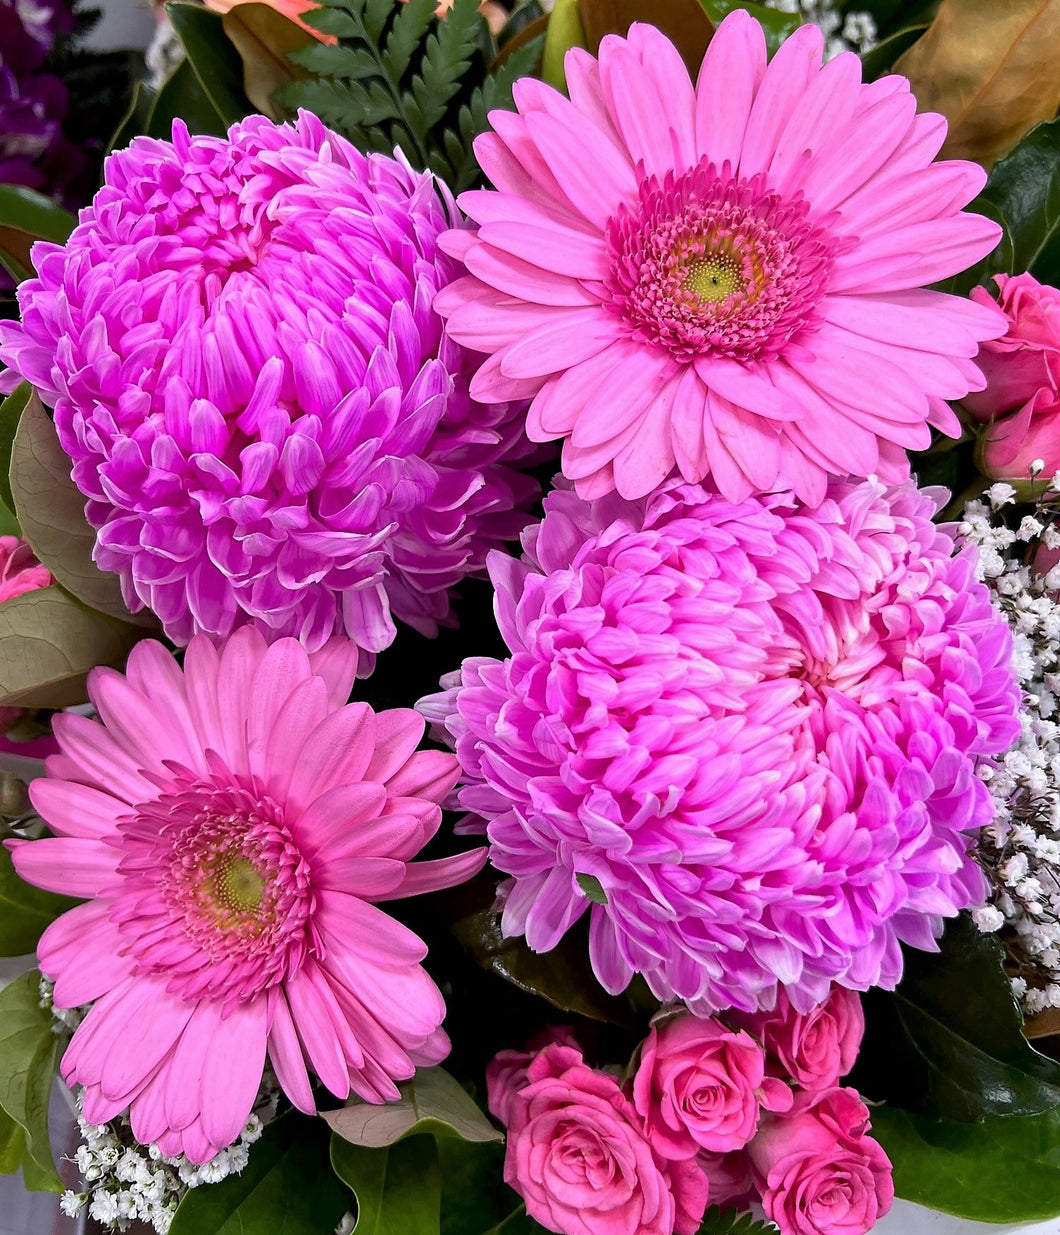 Florist Choice - Pinks